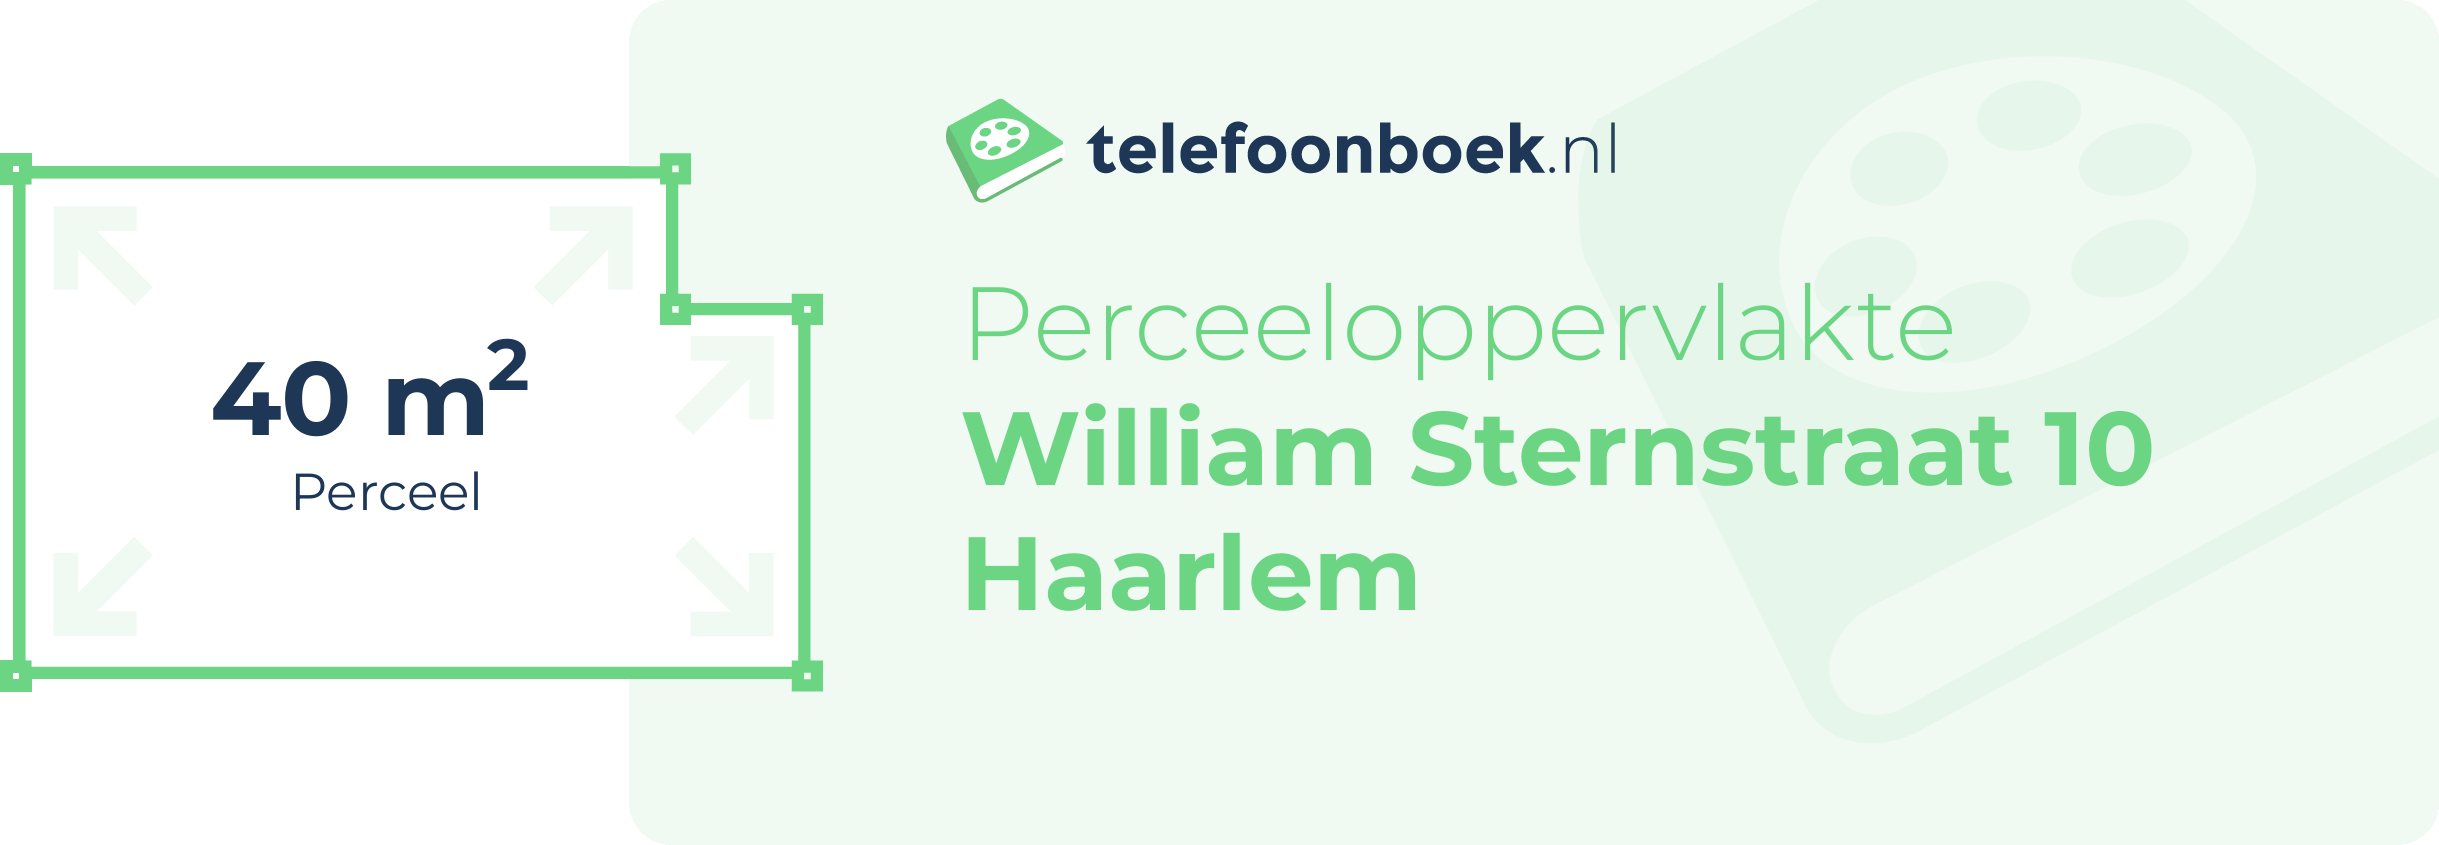 Perceeloppervlakte William Sternstraat 10 Haarlem